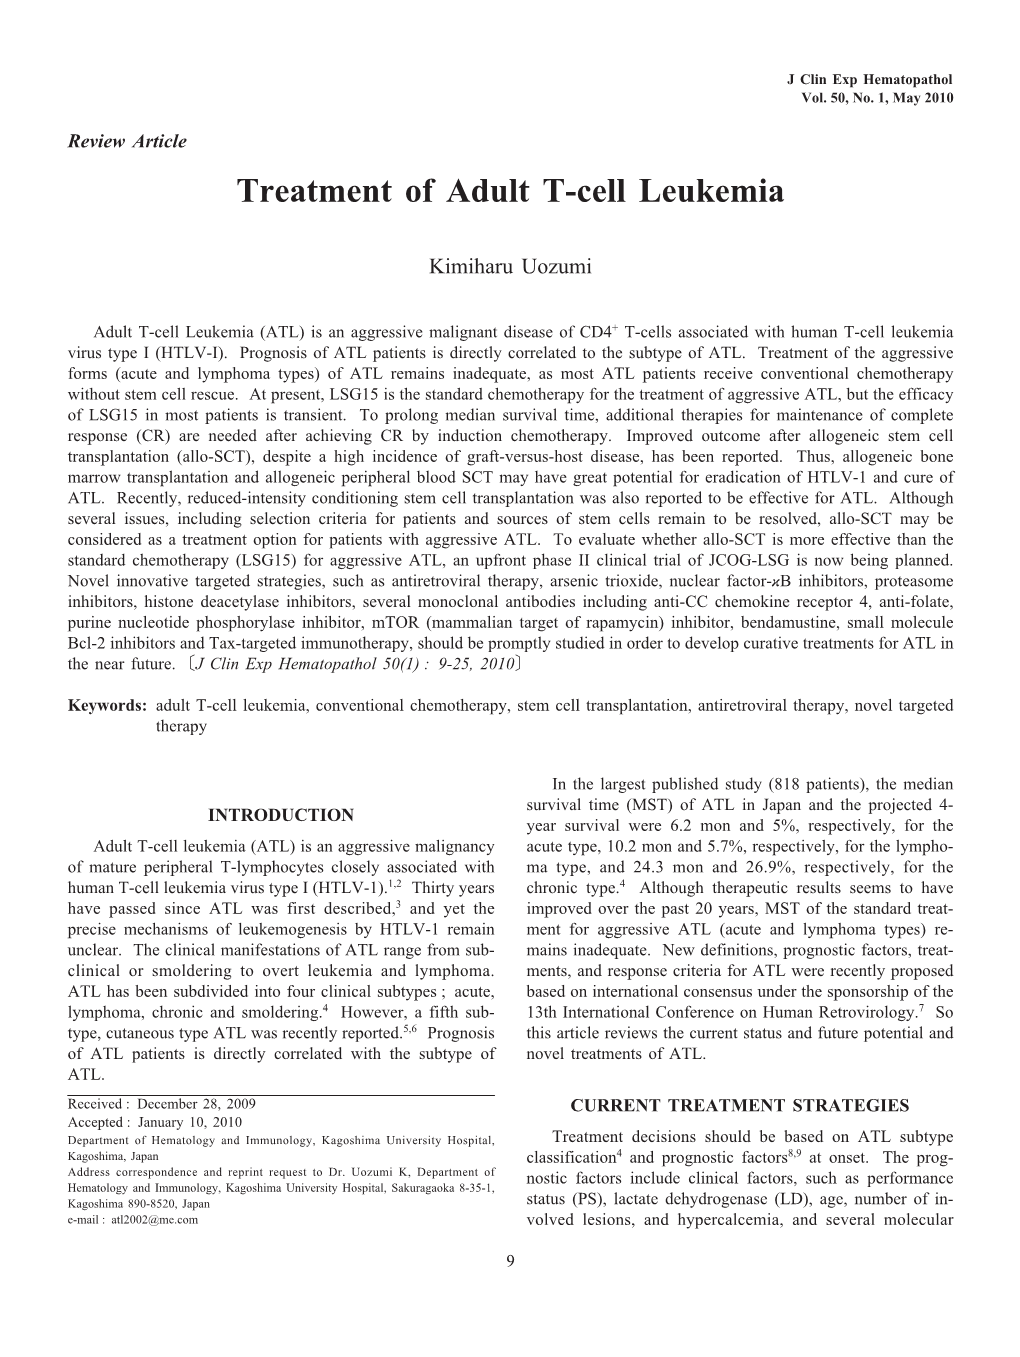 Treatment of Adult T-Cell Leukemia